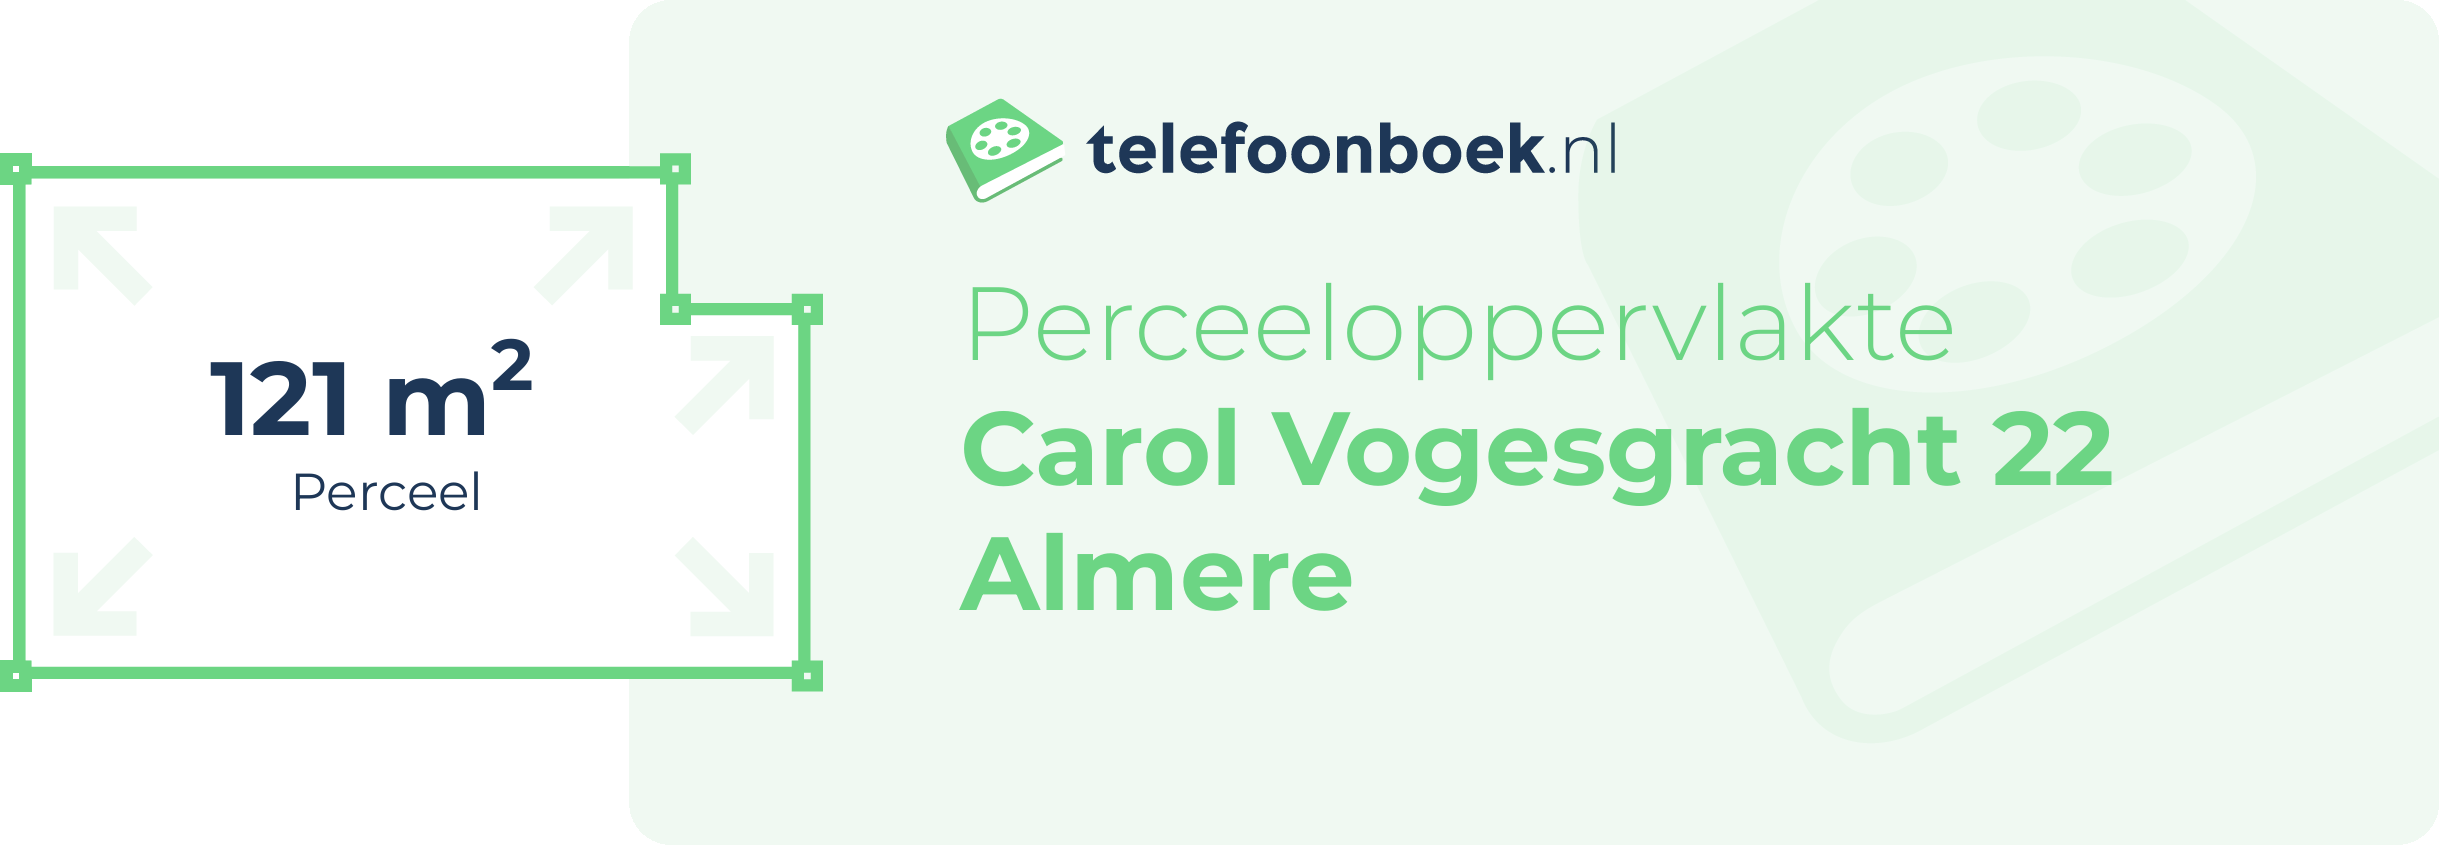 Perceeloppervlakte Carol Vogesgracht 22 Almere